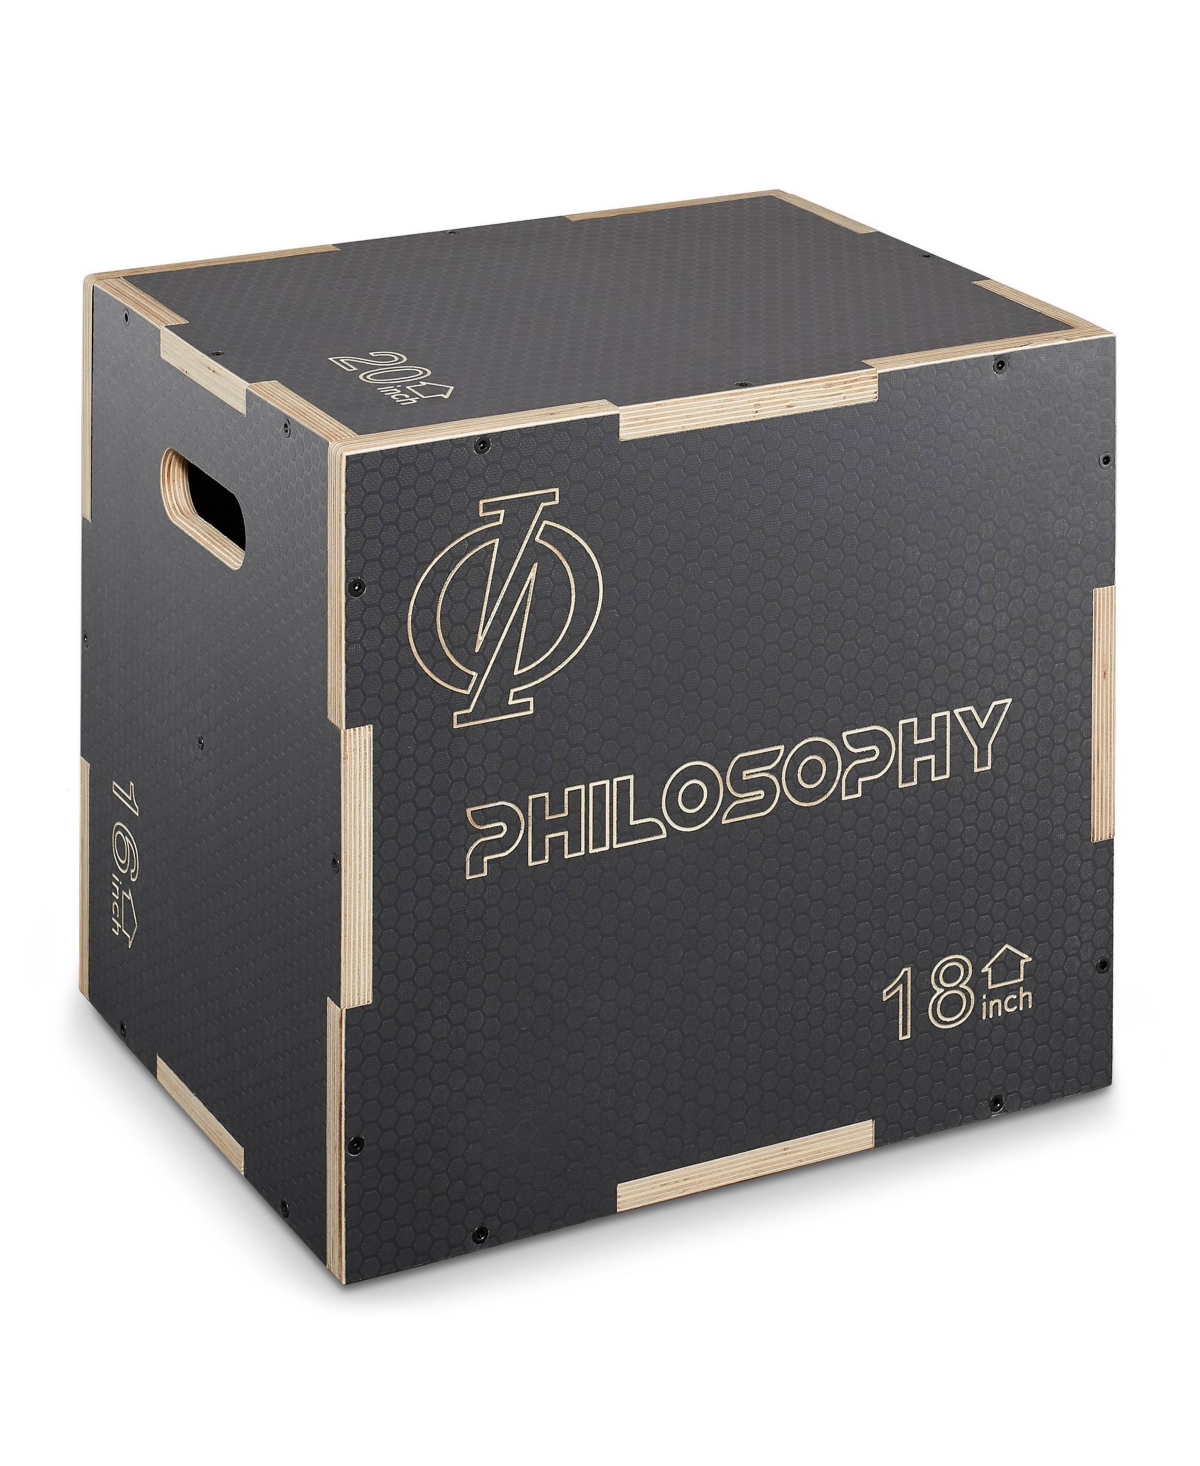 3 in 1 Non-Slip Wood Plyo Box, 20" x 18" x 16", Gray, Jump Plyometric Box for Training and Conditioning - Grey